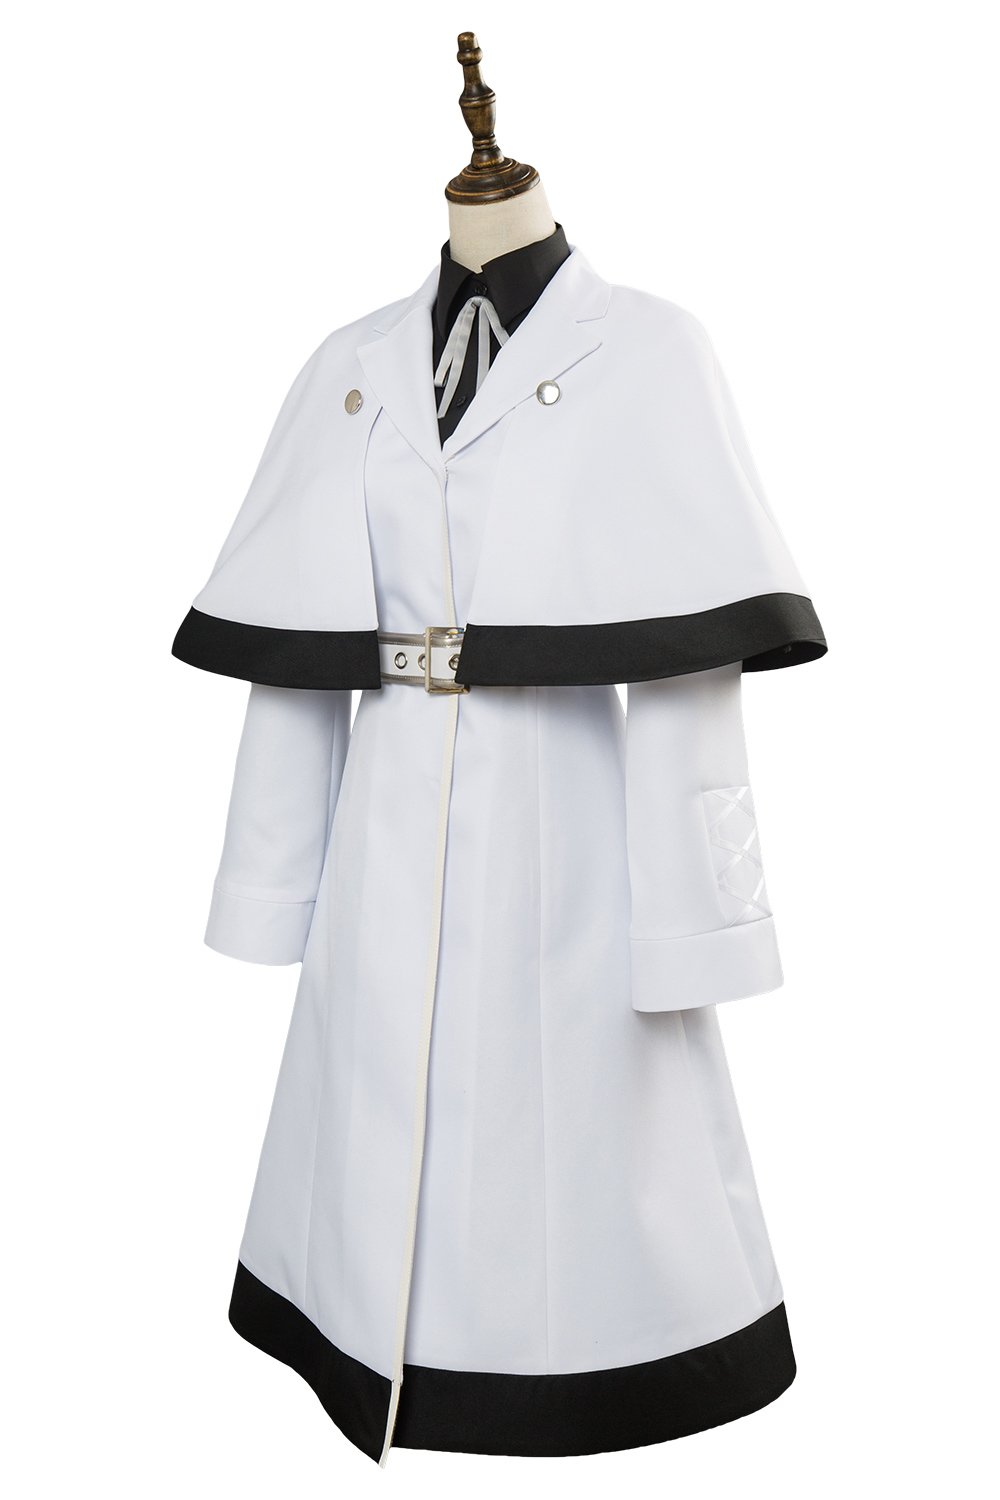 Tokyo Ghoul:re Saiko Yonebayashi Cosplay white coat costume